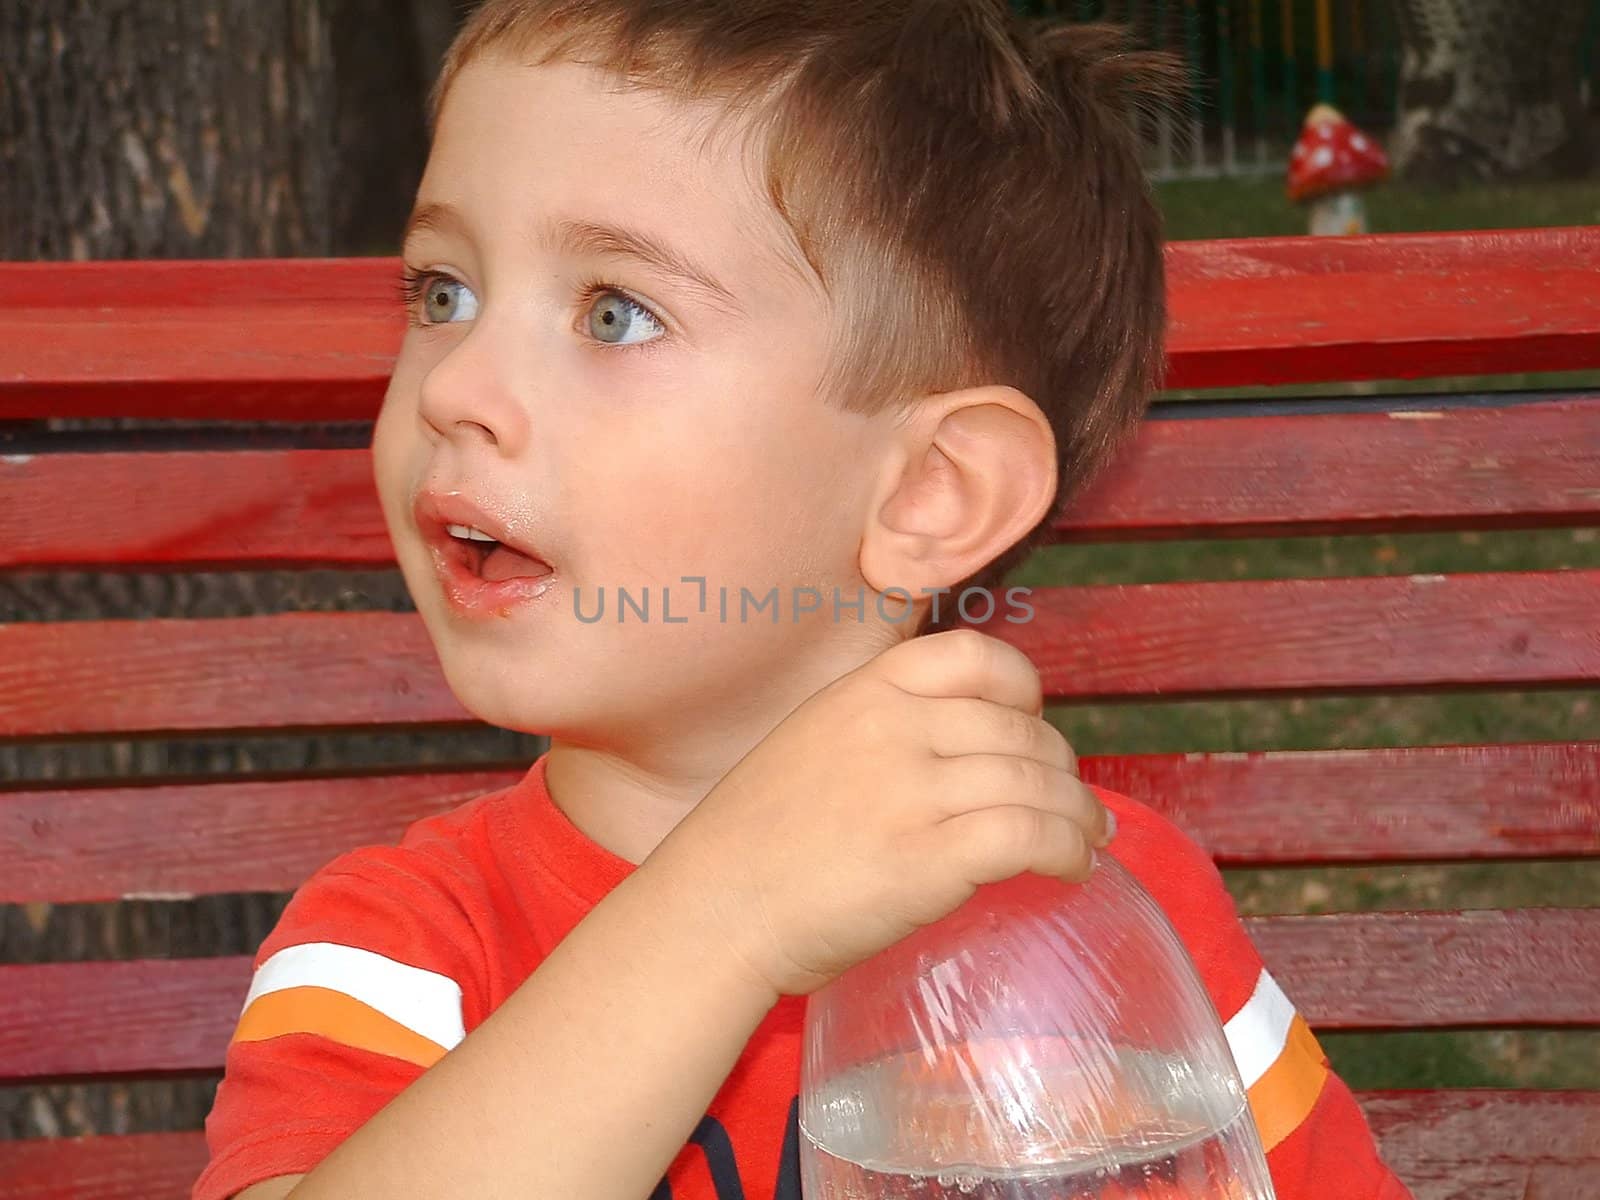  The boy with a bottle of soda water by myyayko